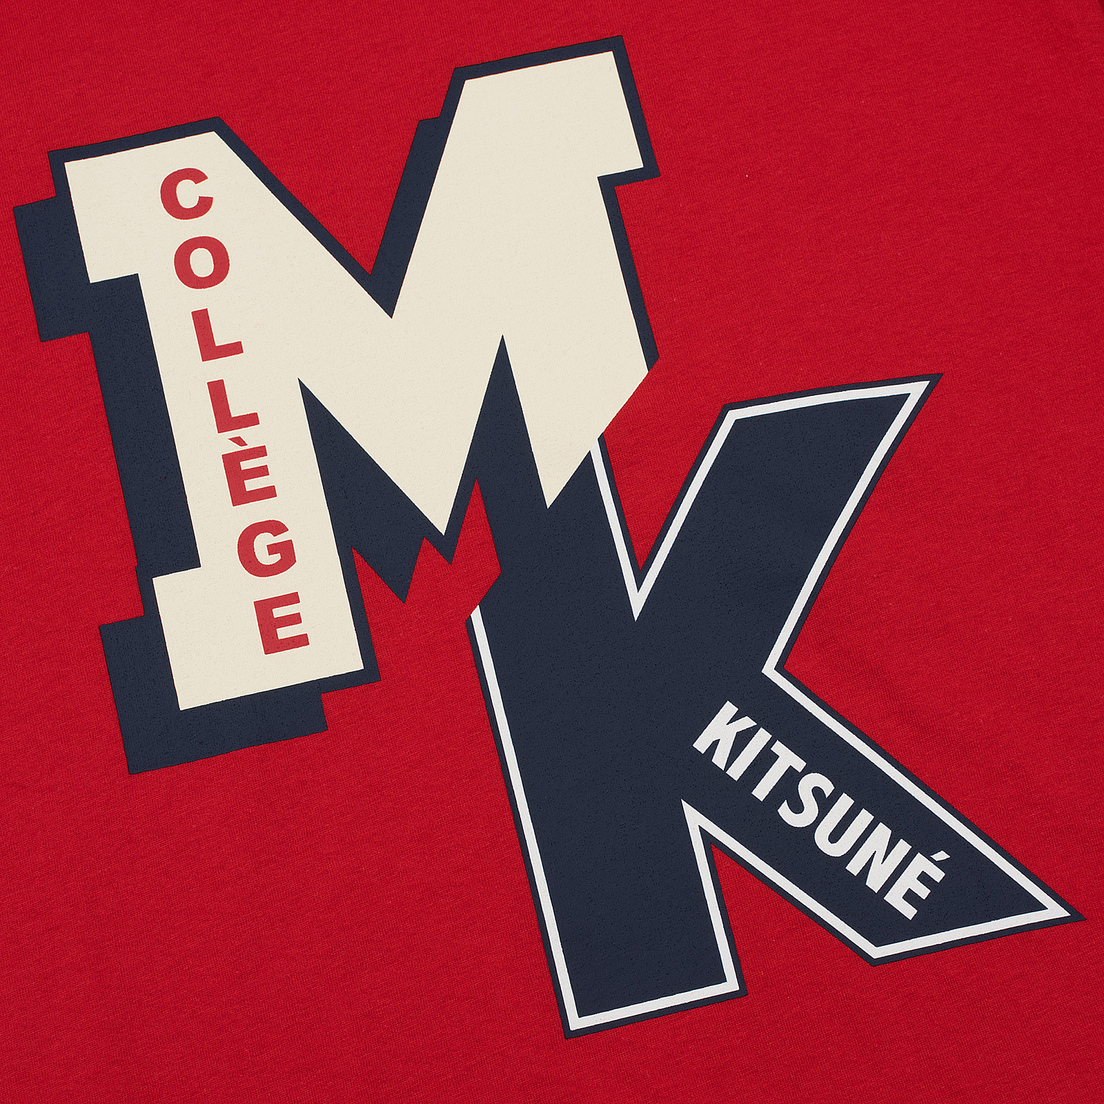 Maison Kitsune Женская футболка MK College